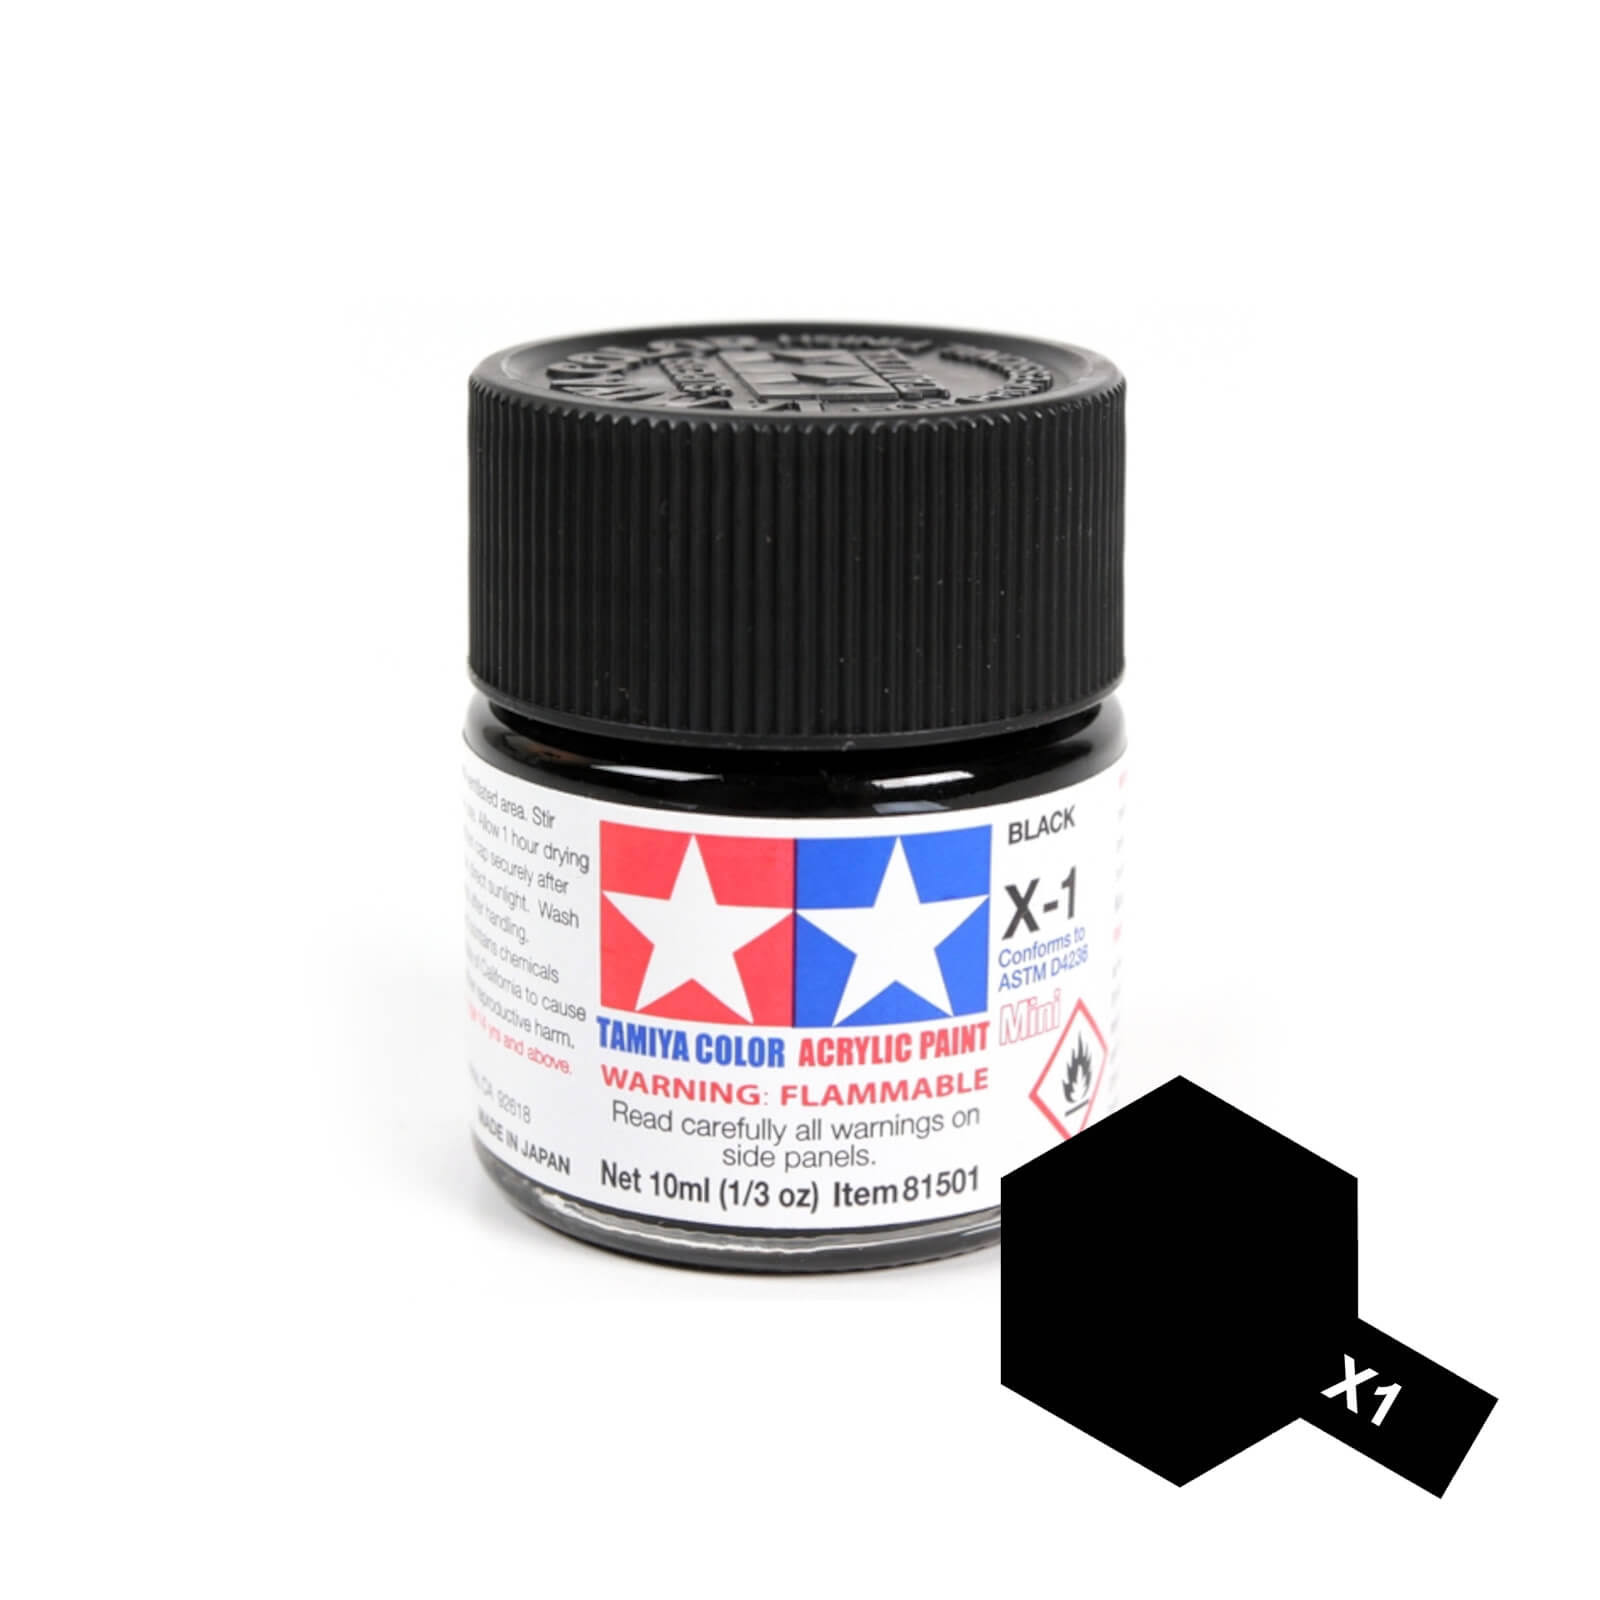 Tamiya Acrylic Mini X-1 Black 1/3 oz 81501